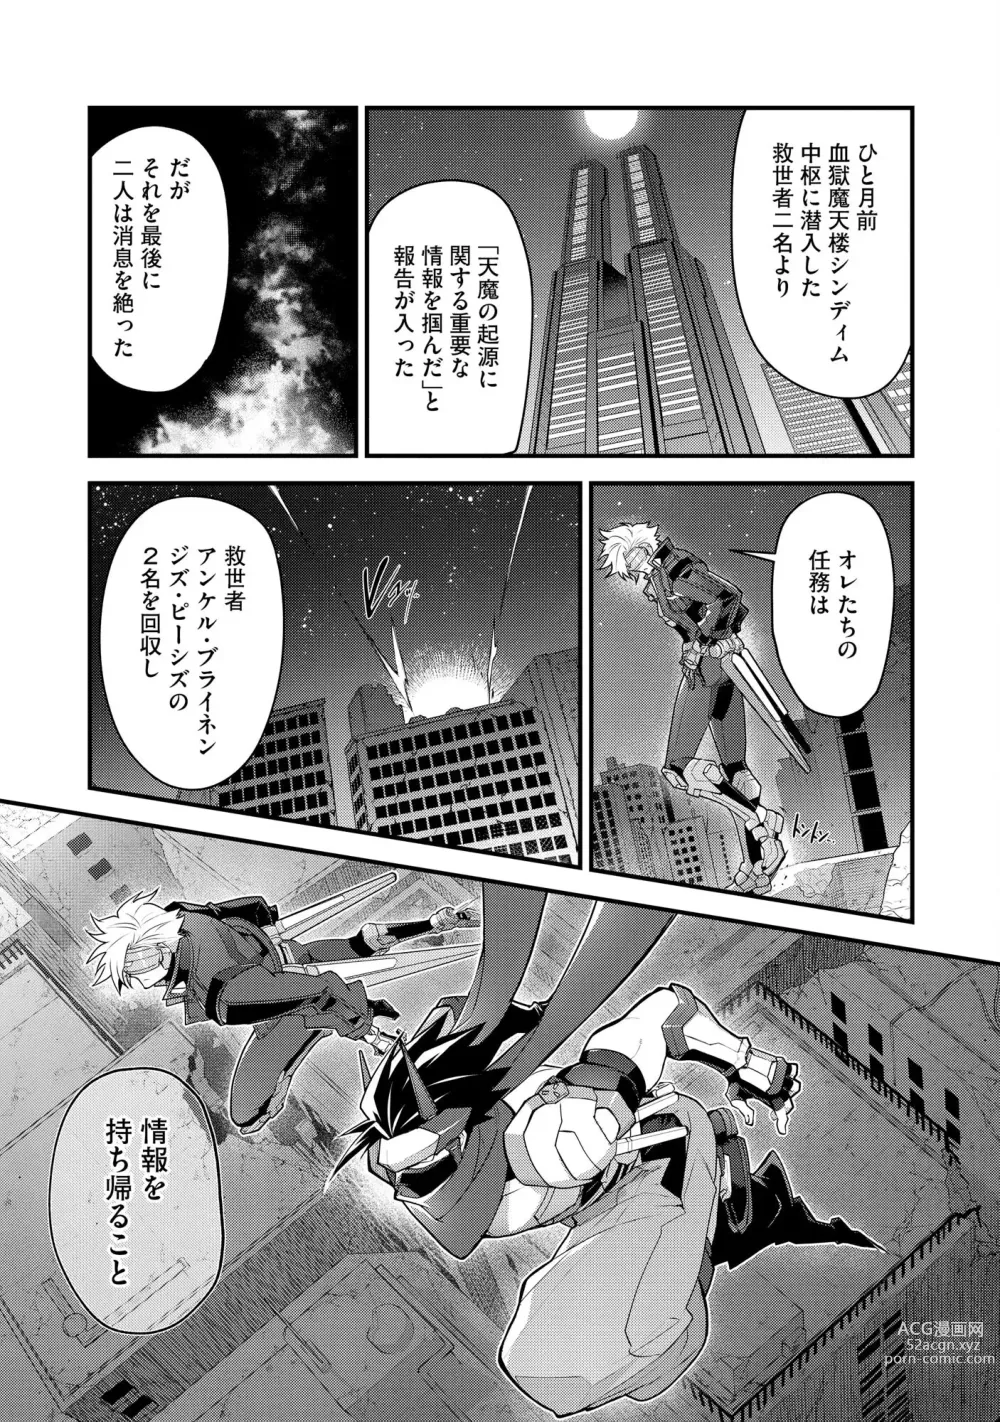 Page 13 of manga Haiboku Eiyuu, Ryoujoku